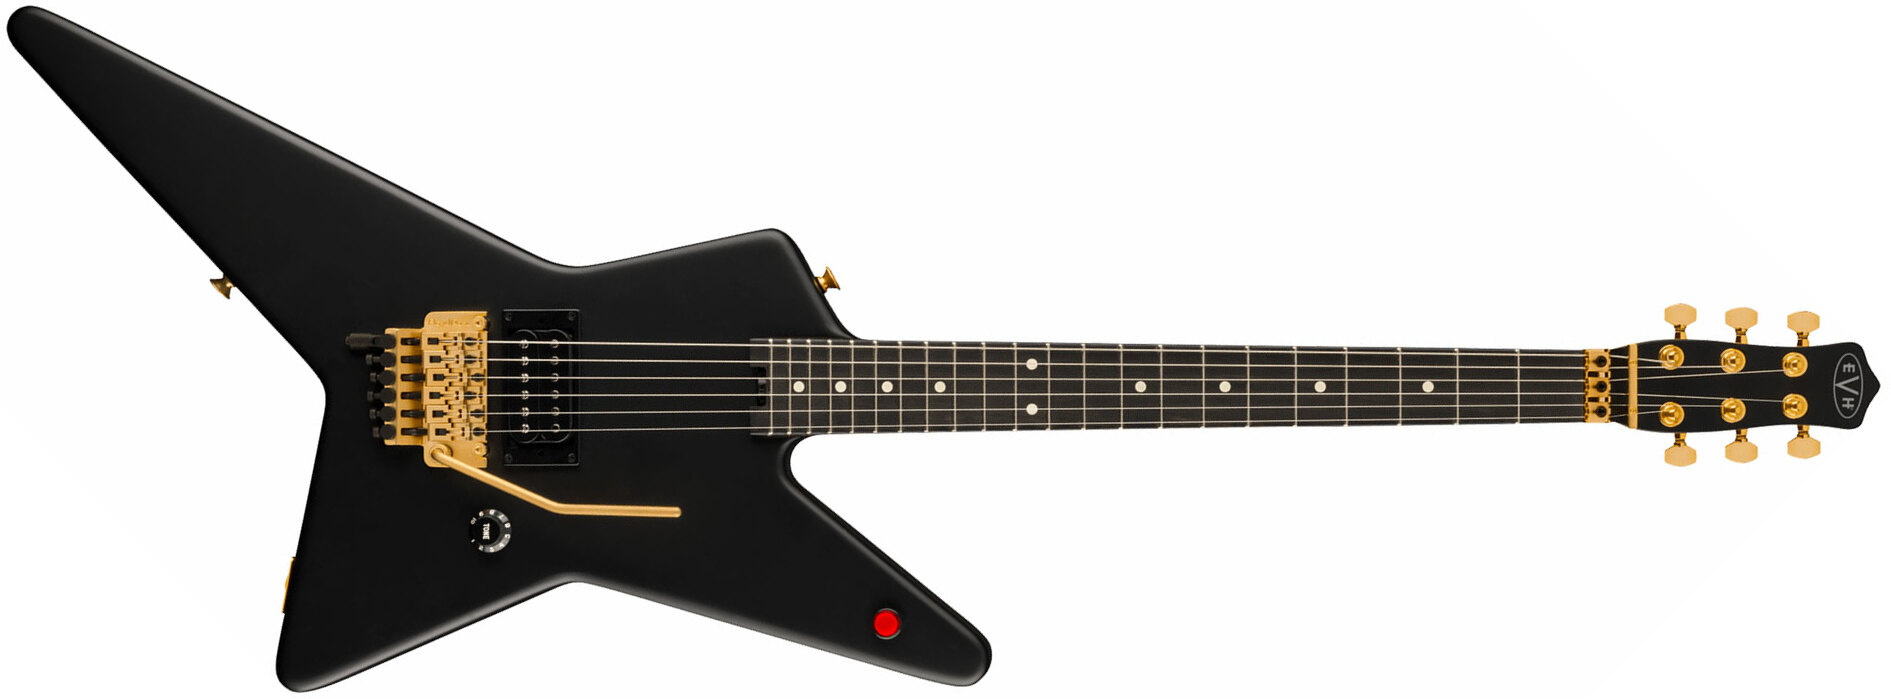 Evh Star Limited Edition 1h Fr Eb - Stealth Black With Gold Hardware - Guitare Électrique MÉtal - Main picture